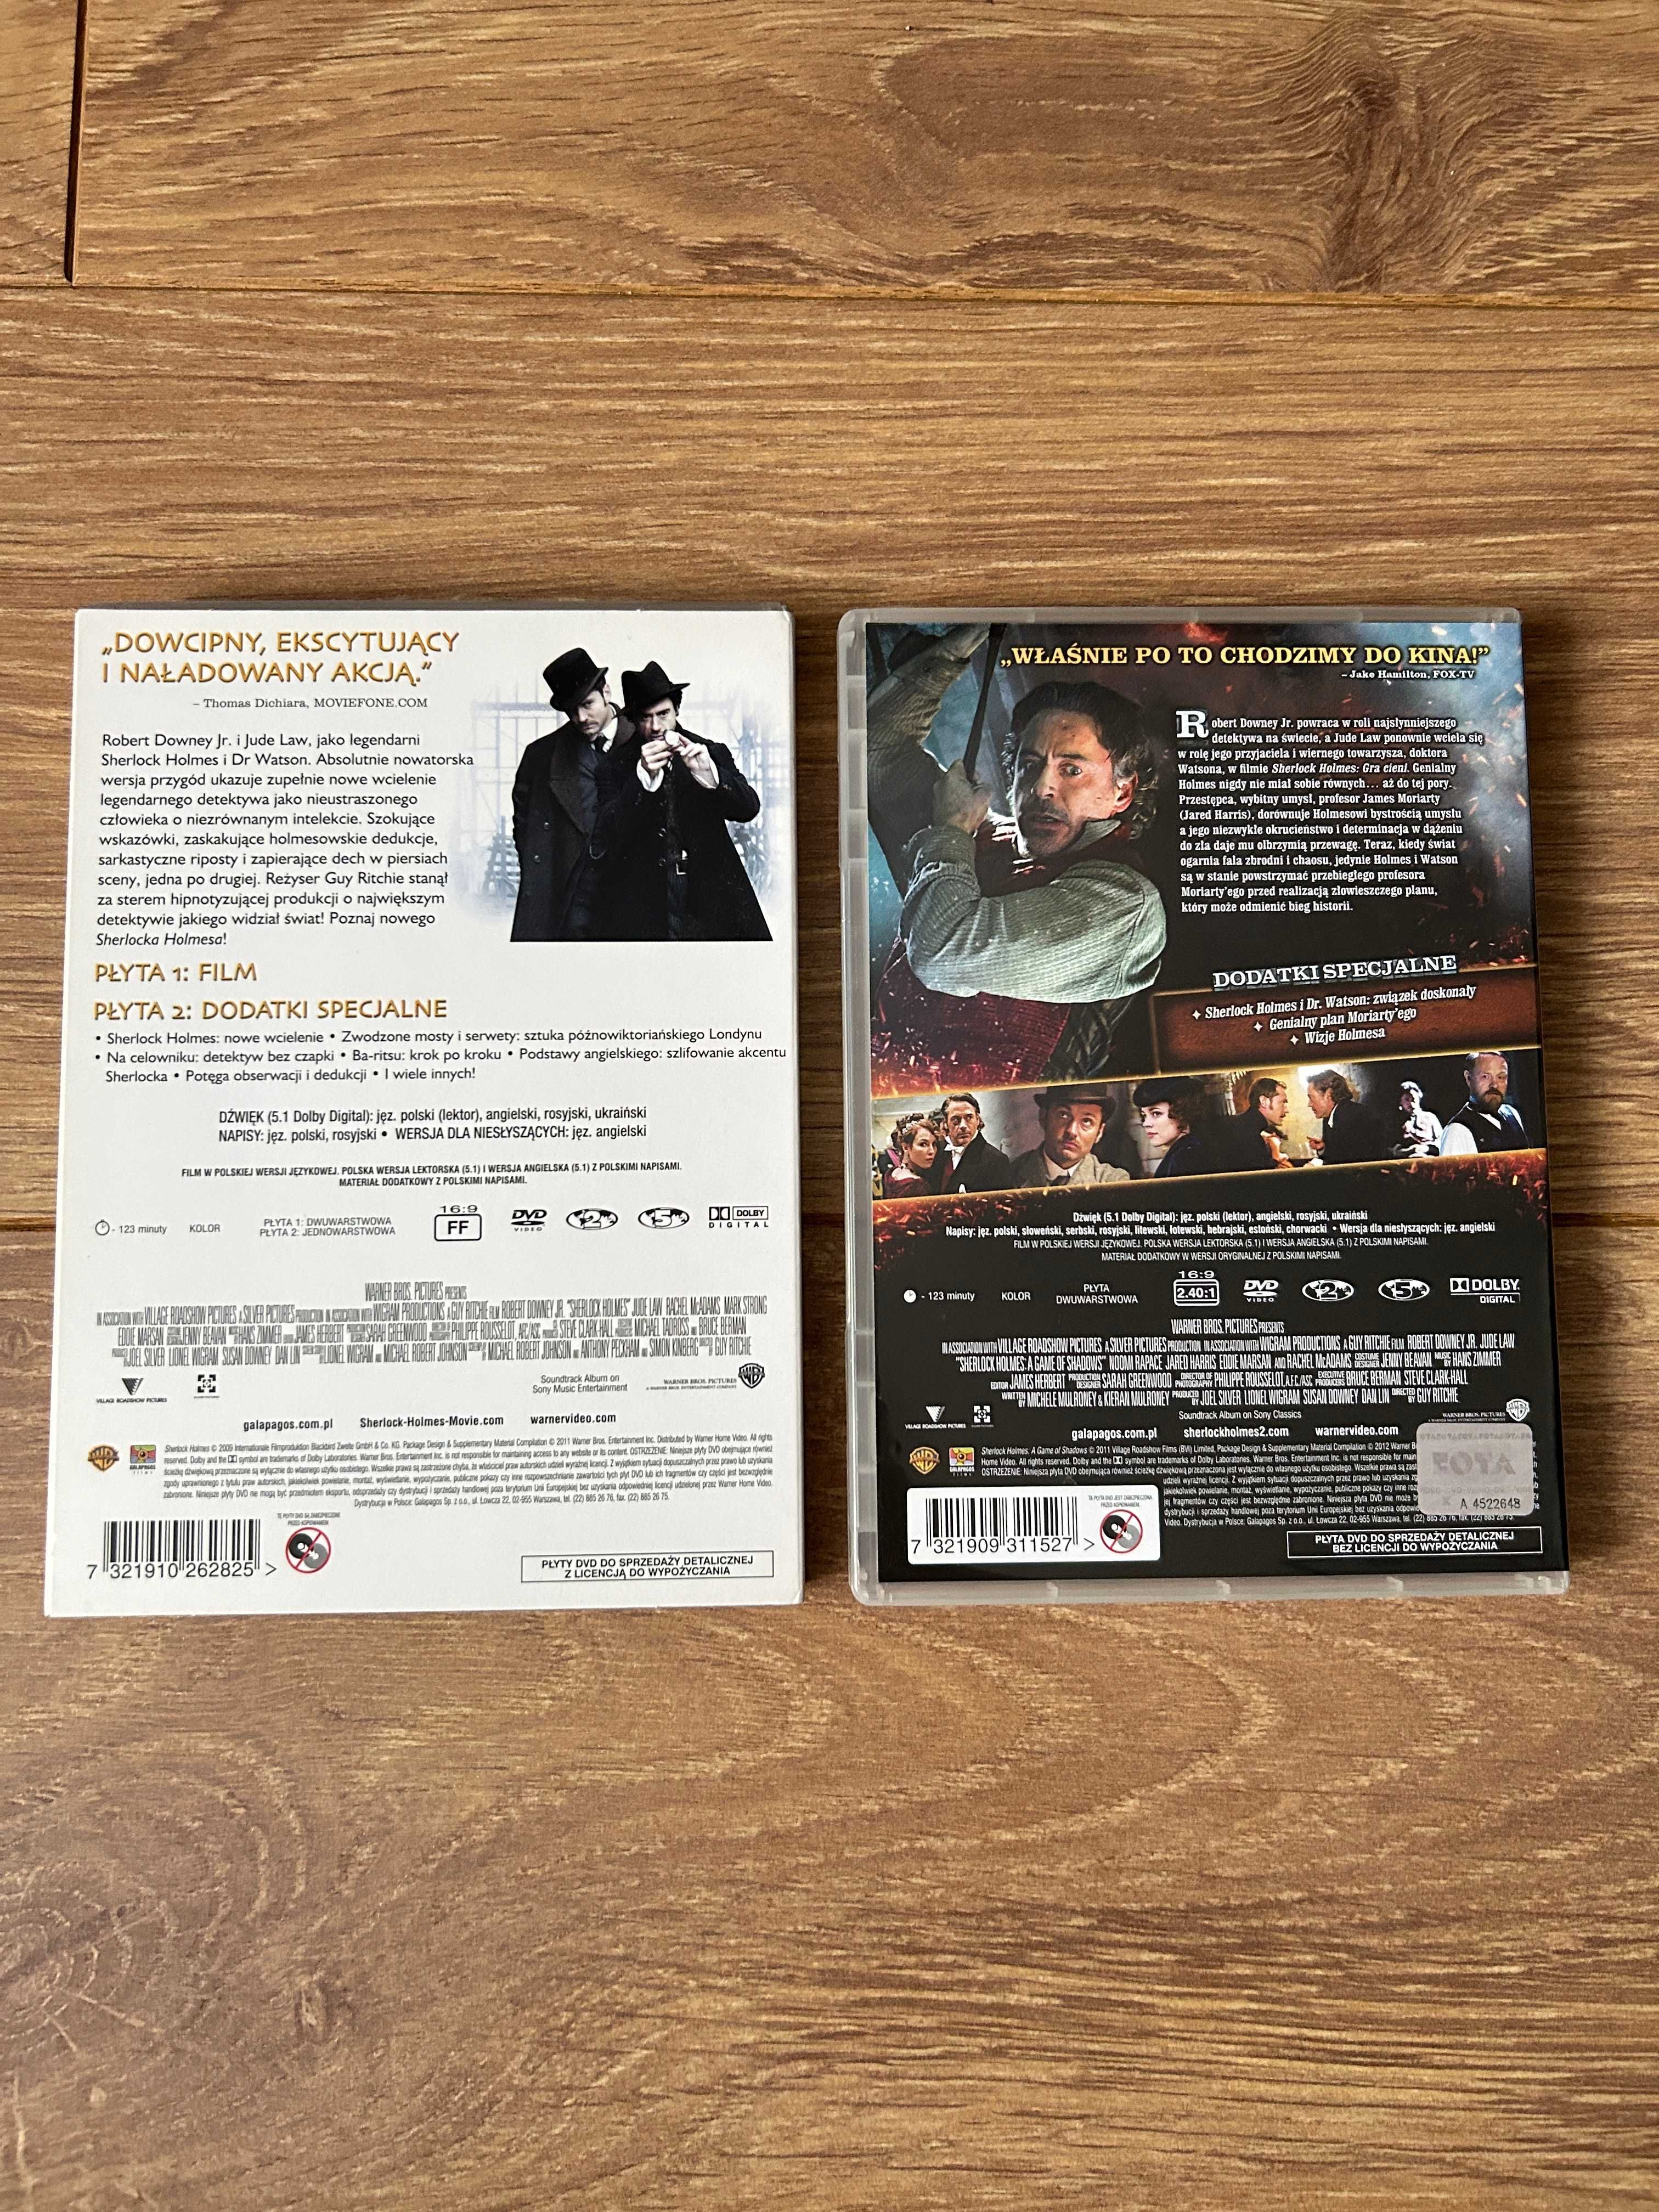 Sherlock Holmes i Sherlock Holmes: Gra cieni DVD